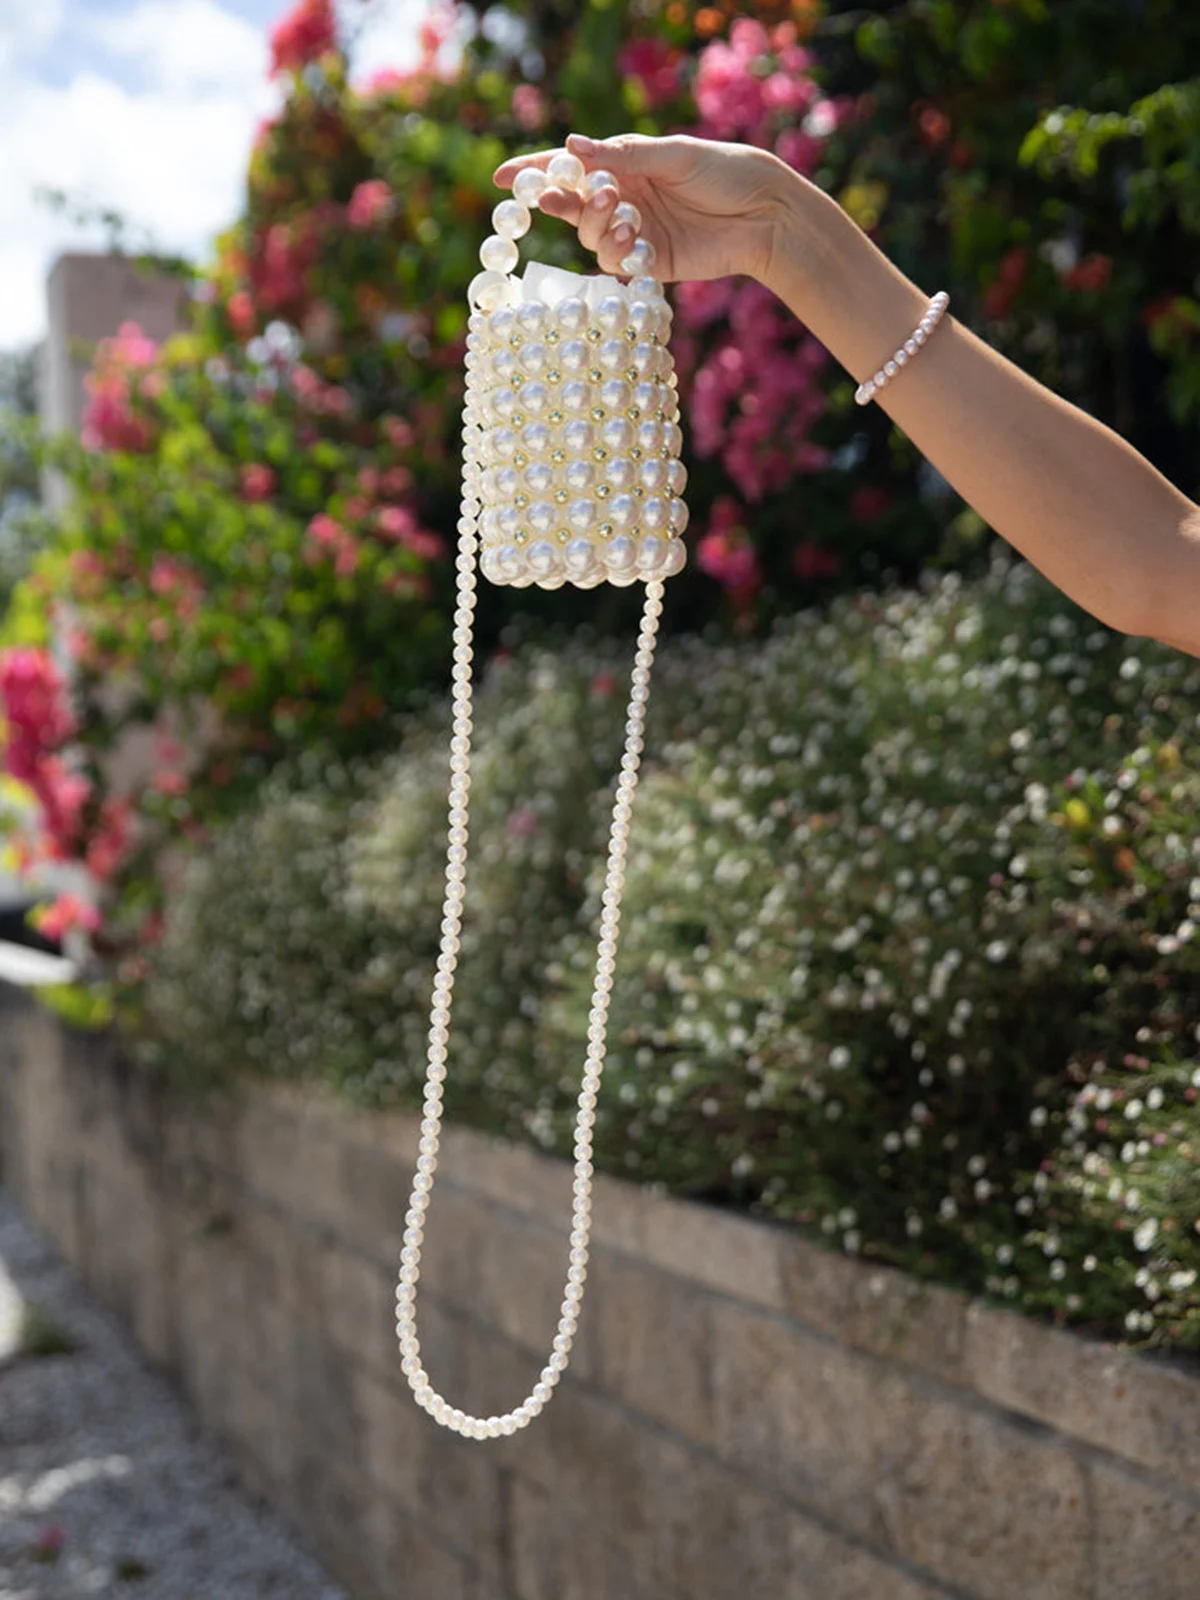 Elegant Imitation Pearl Mini Bucket Bag with Adjustable Strap